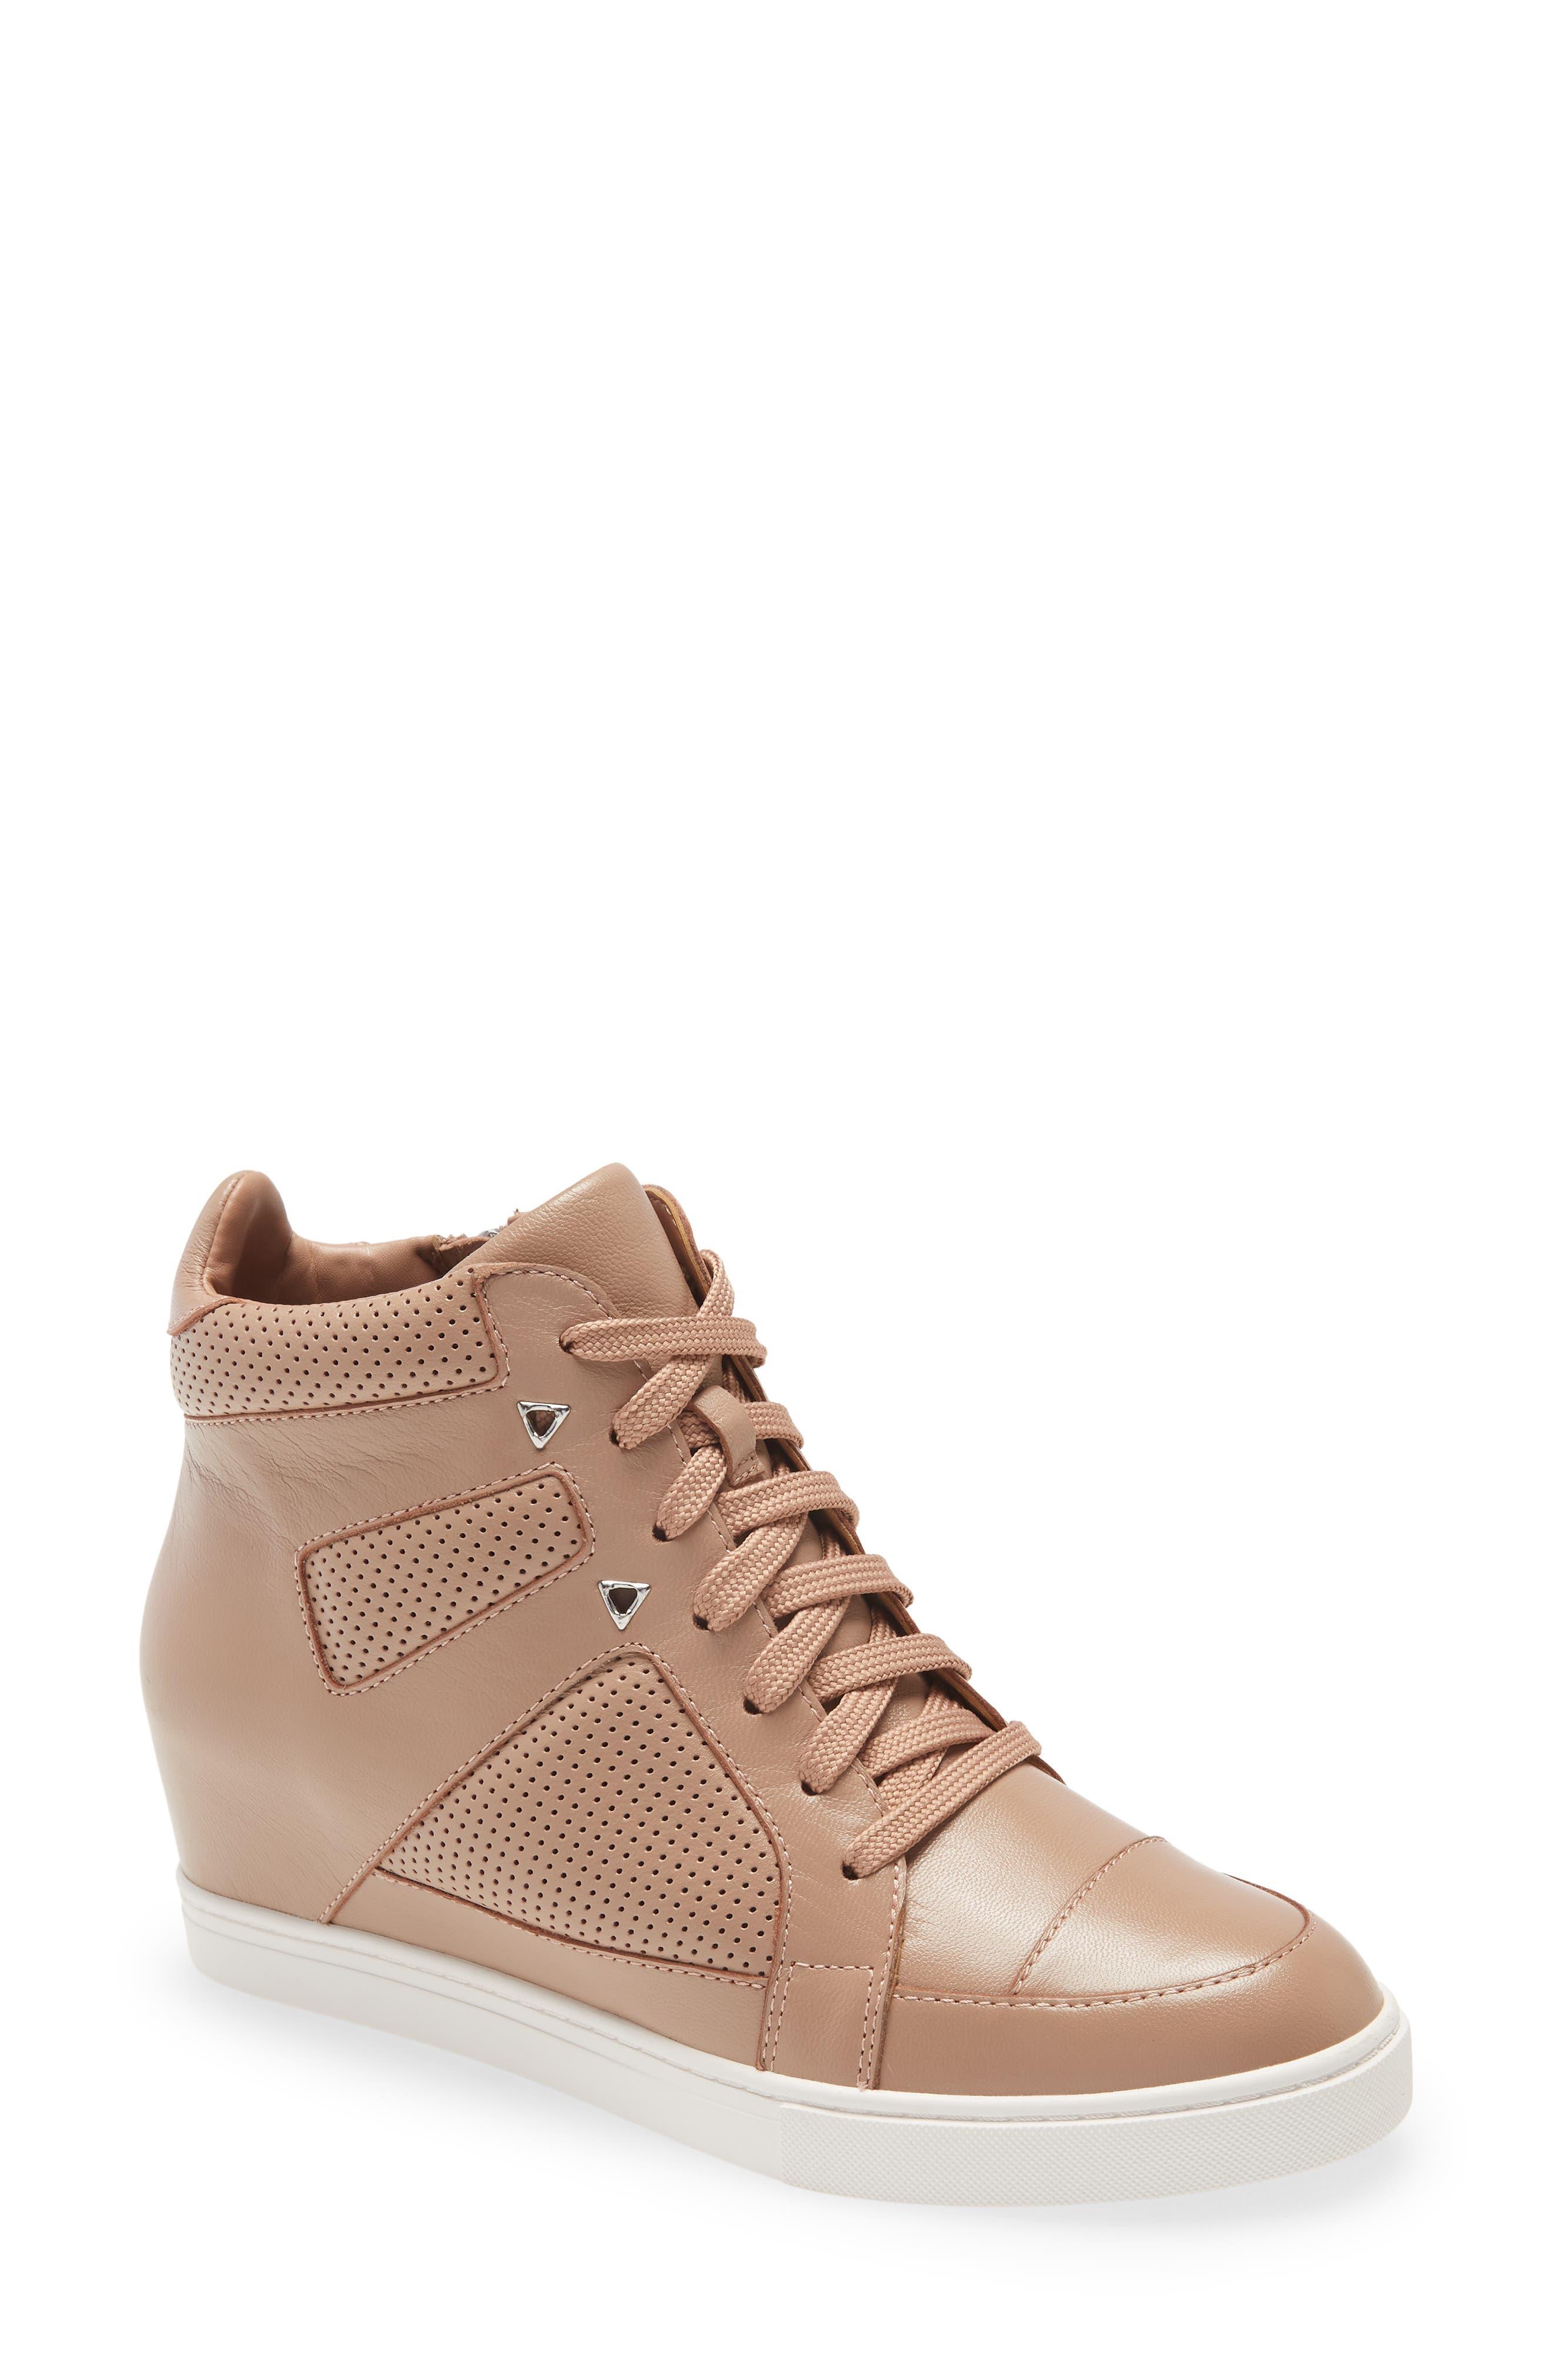 Linea Paolo Farley Wedge Sneaker in Brown | Lyst